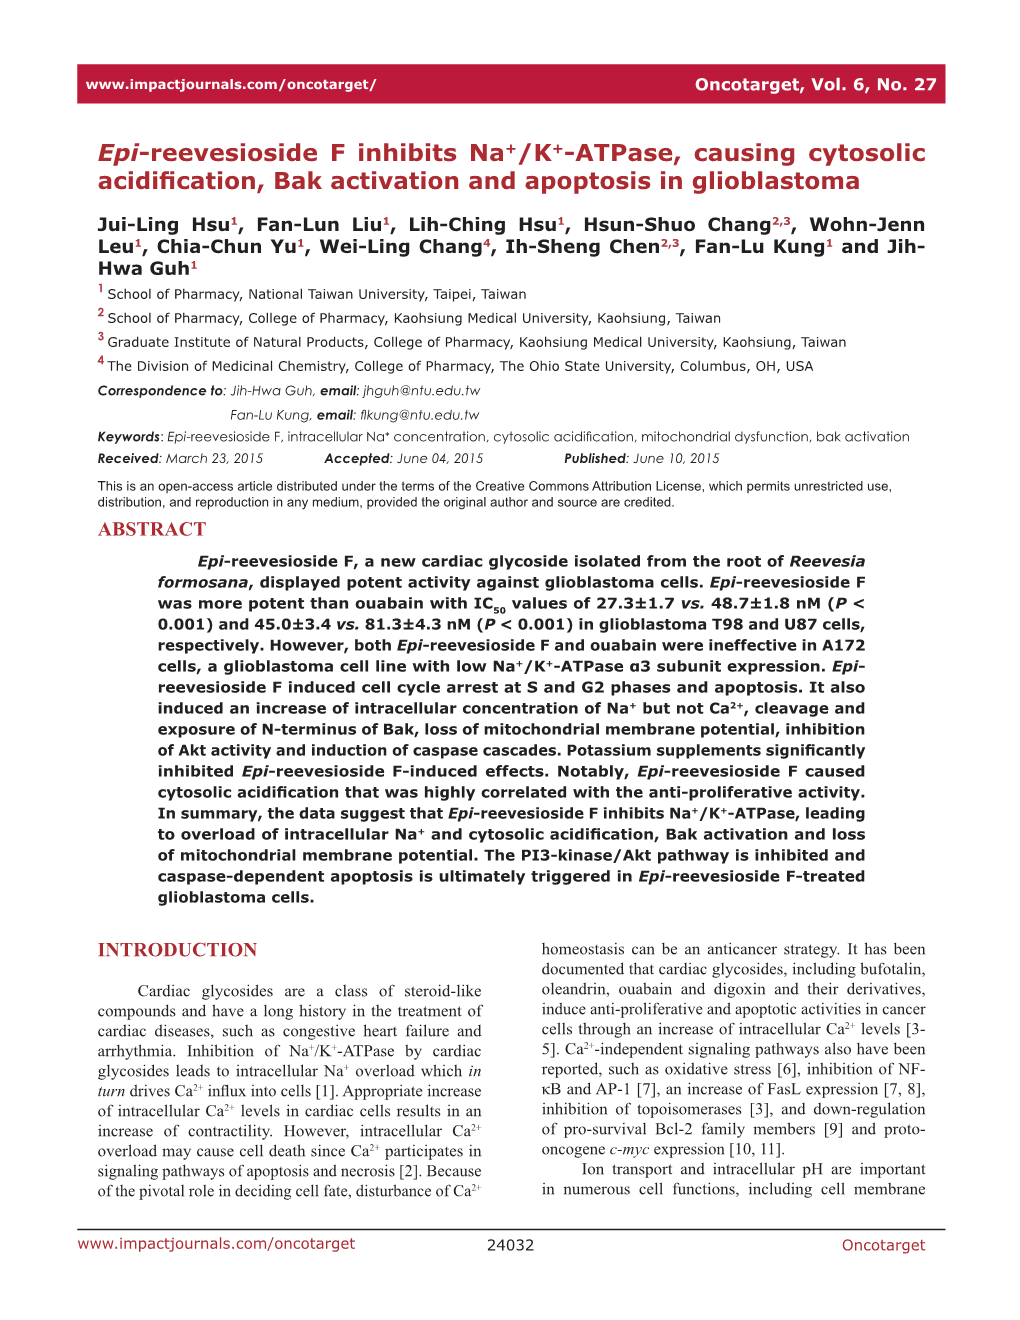 Epi-Reevesioside F Inhibits Na+/K+-Atpase, Causing Cytosolic Acidification, Bak Activation and Apoptosis in Glioblastoma